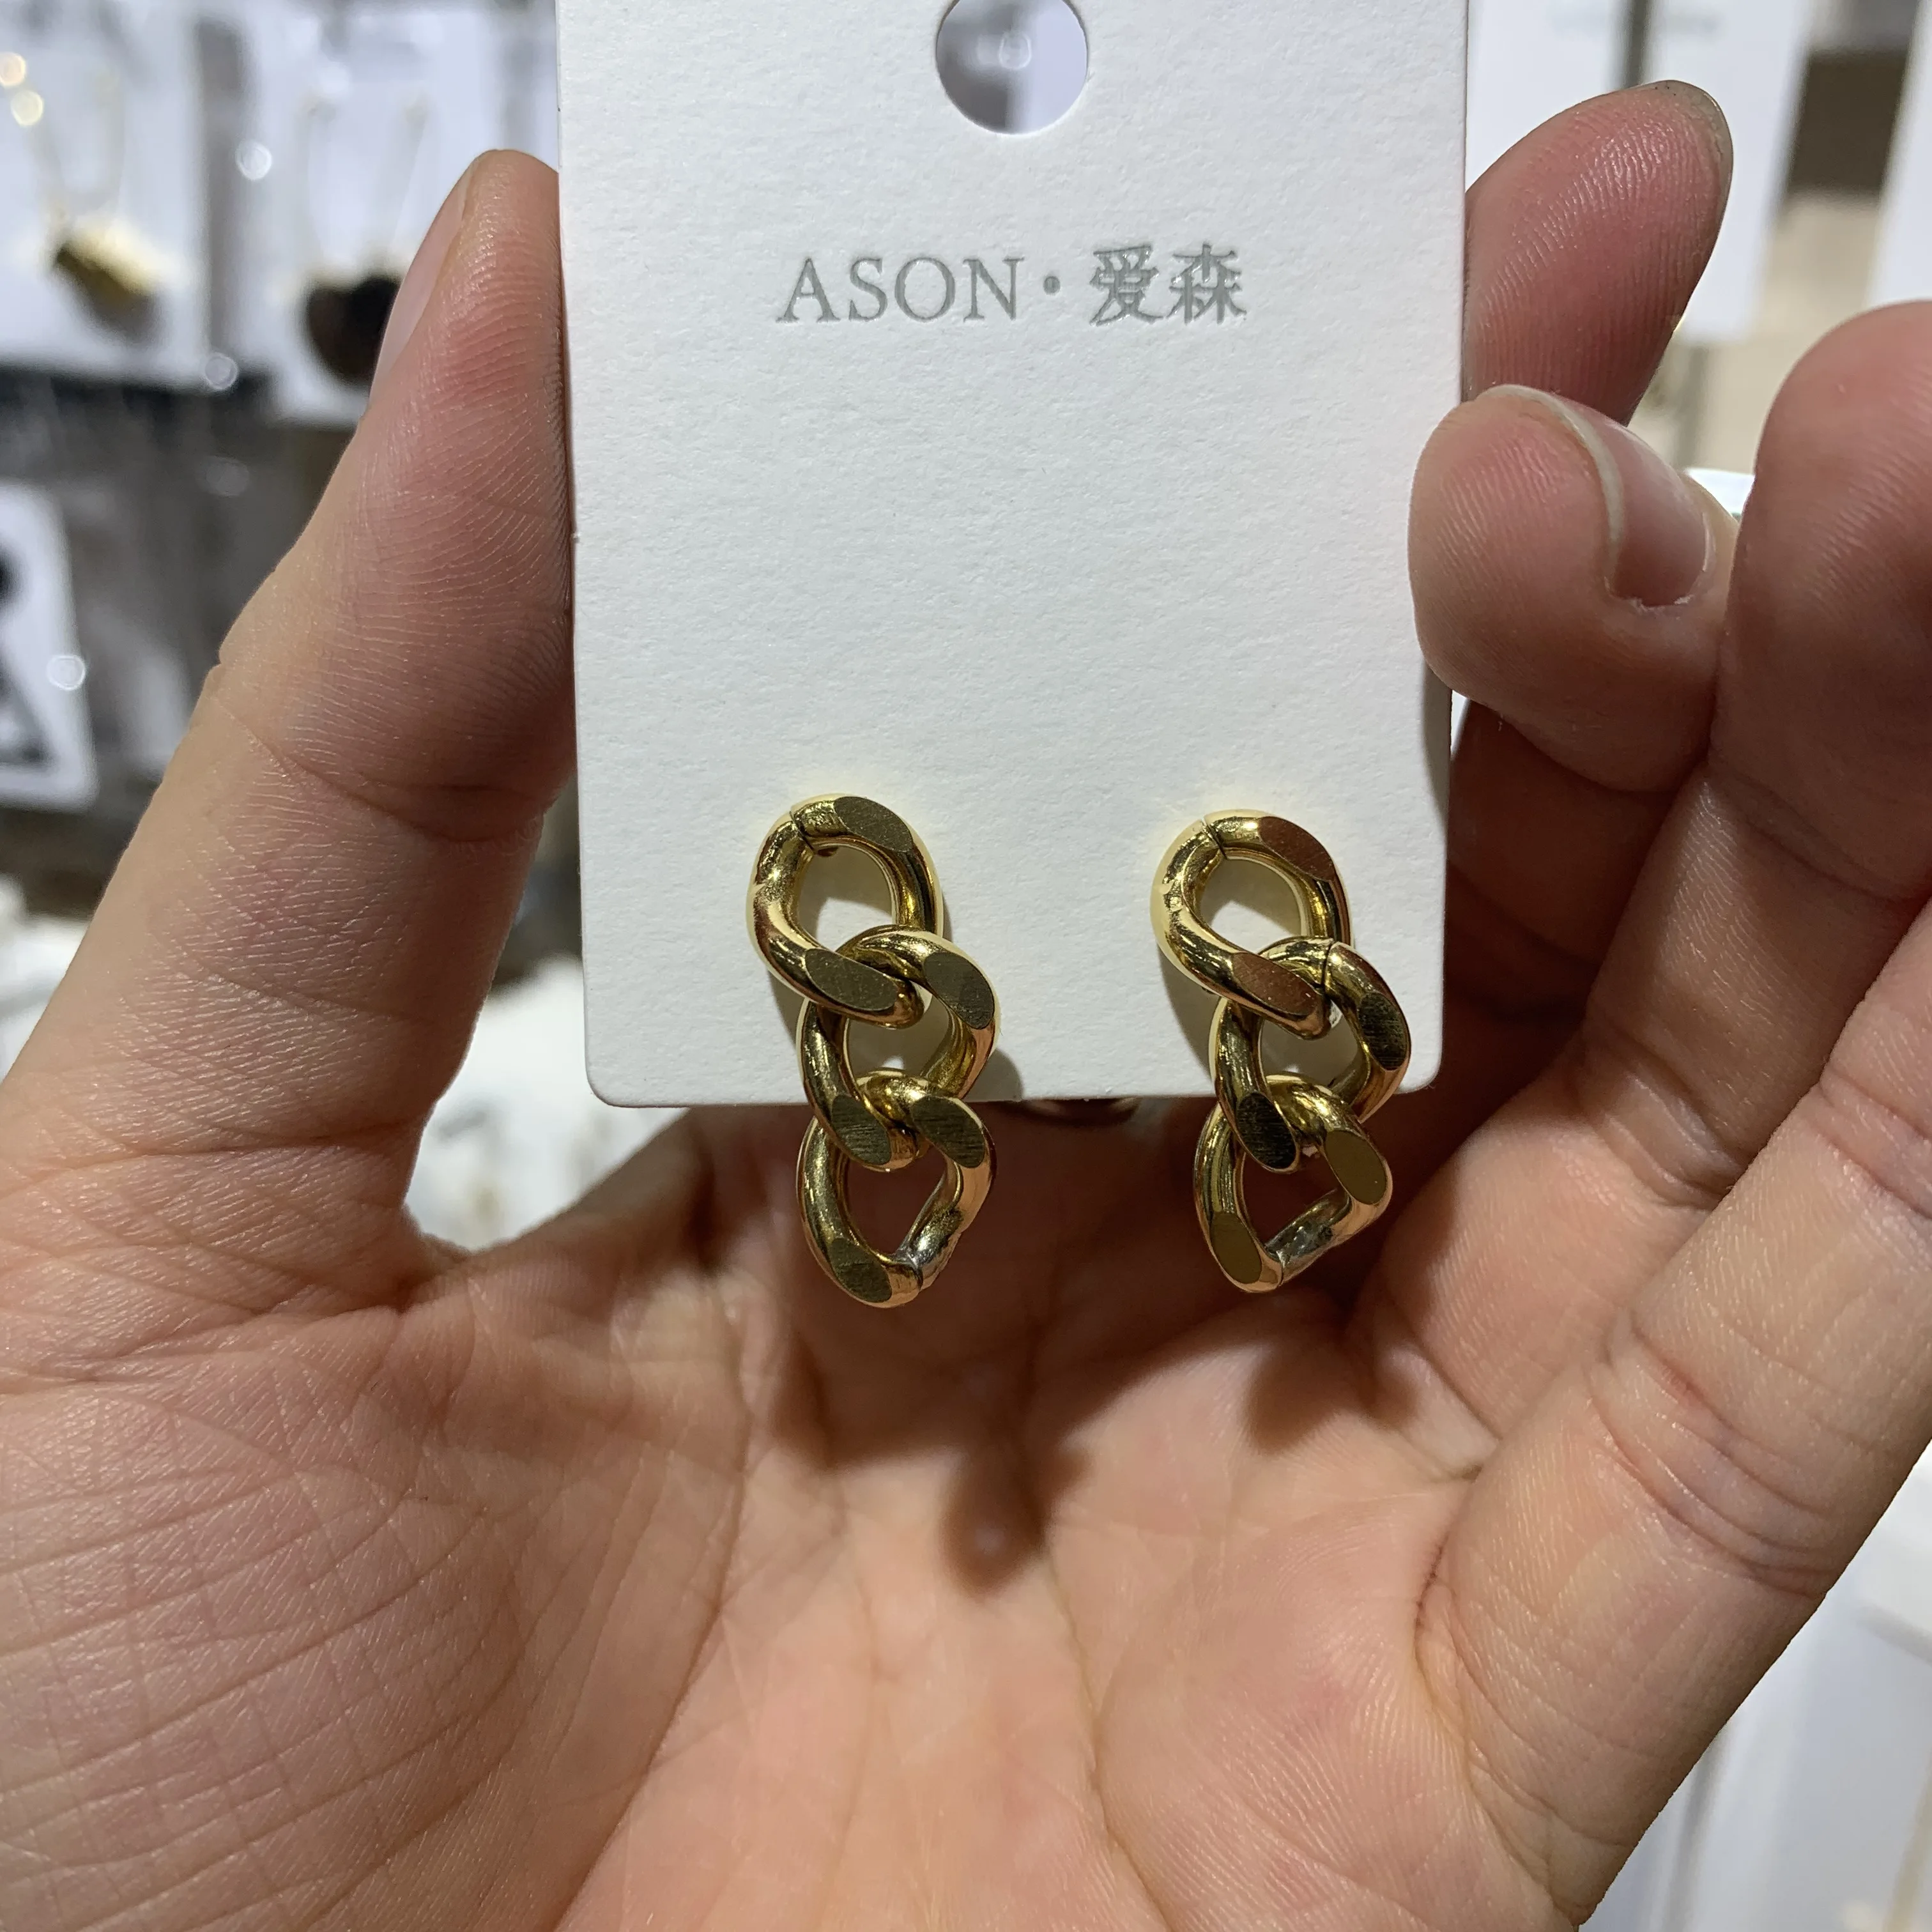 

14K Gold Stainless Steel Tassels Chain Earring Fashion Drop Earrings Long Chain Earrings For Women Female Jewelry, Gold/silver/rose/black available